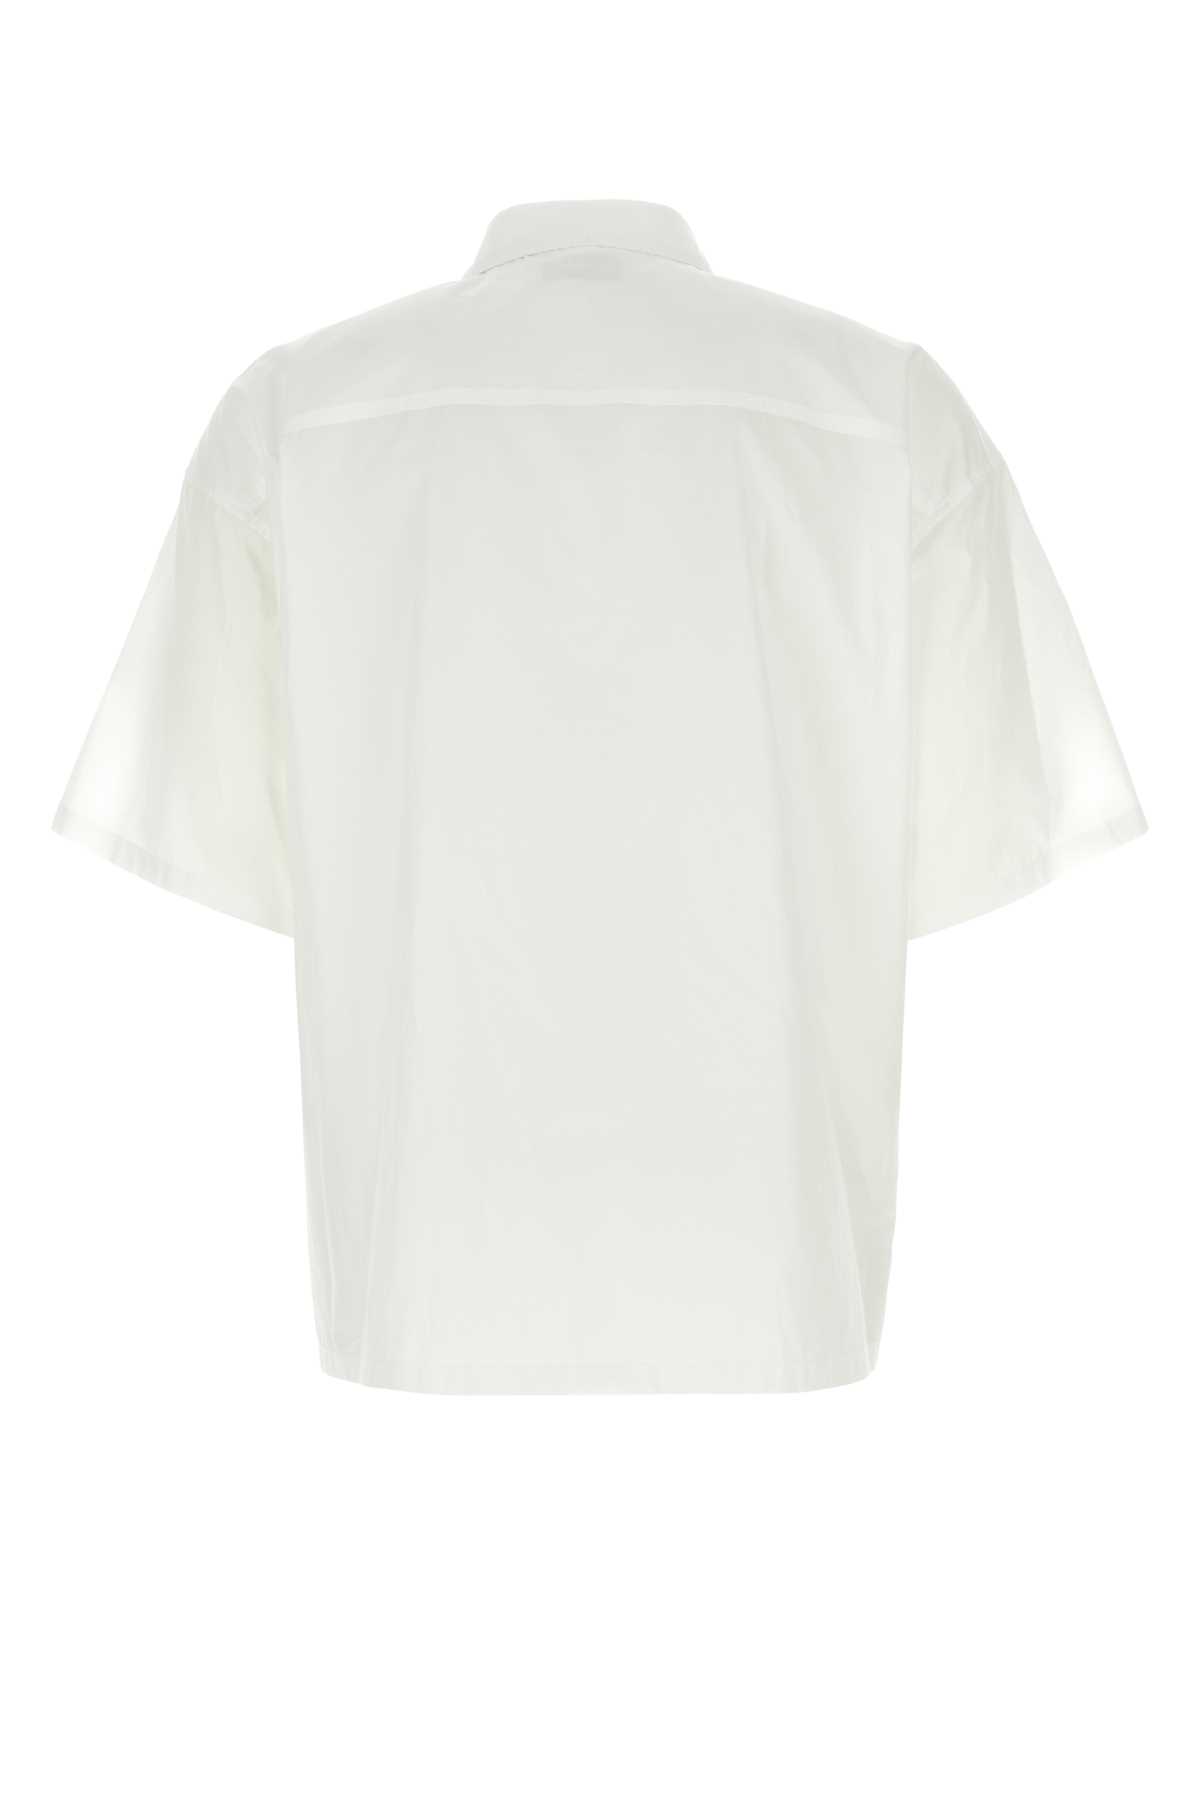 Ambush White Poplin Shirt In Blancdeb